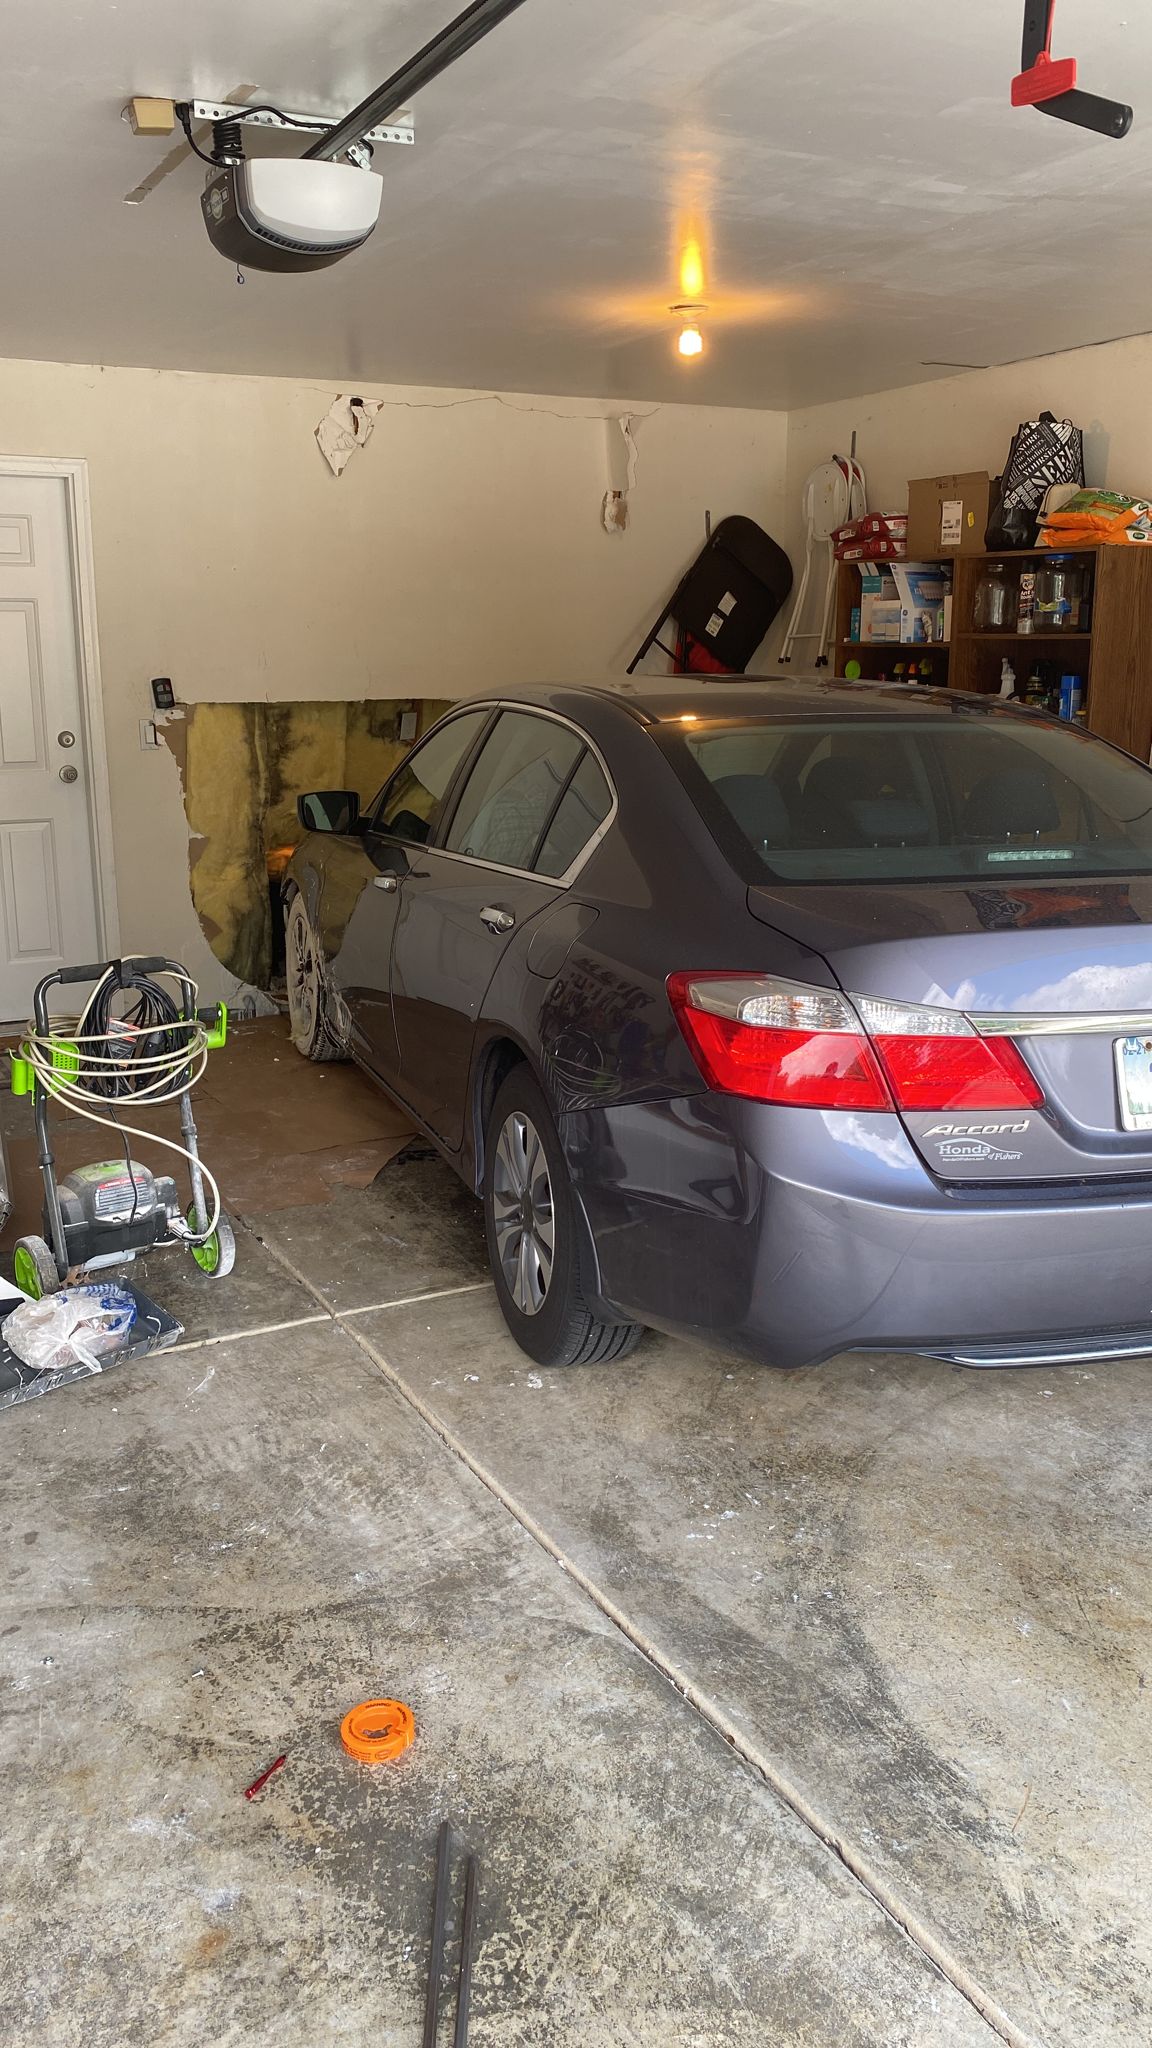 Carmel Customer hit the garage door wall with his car